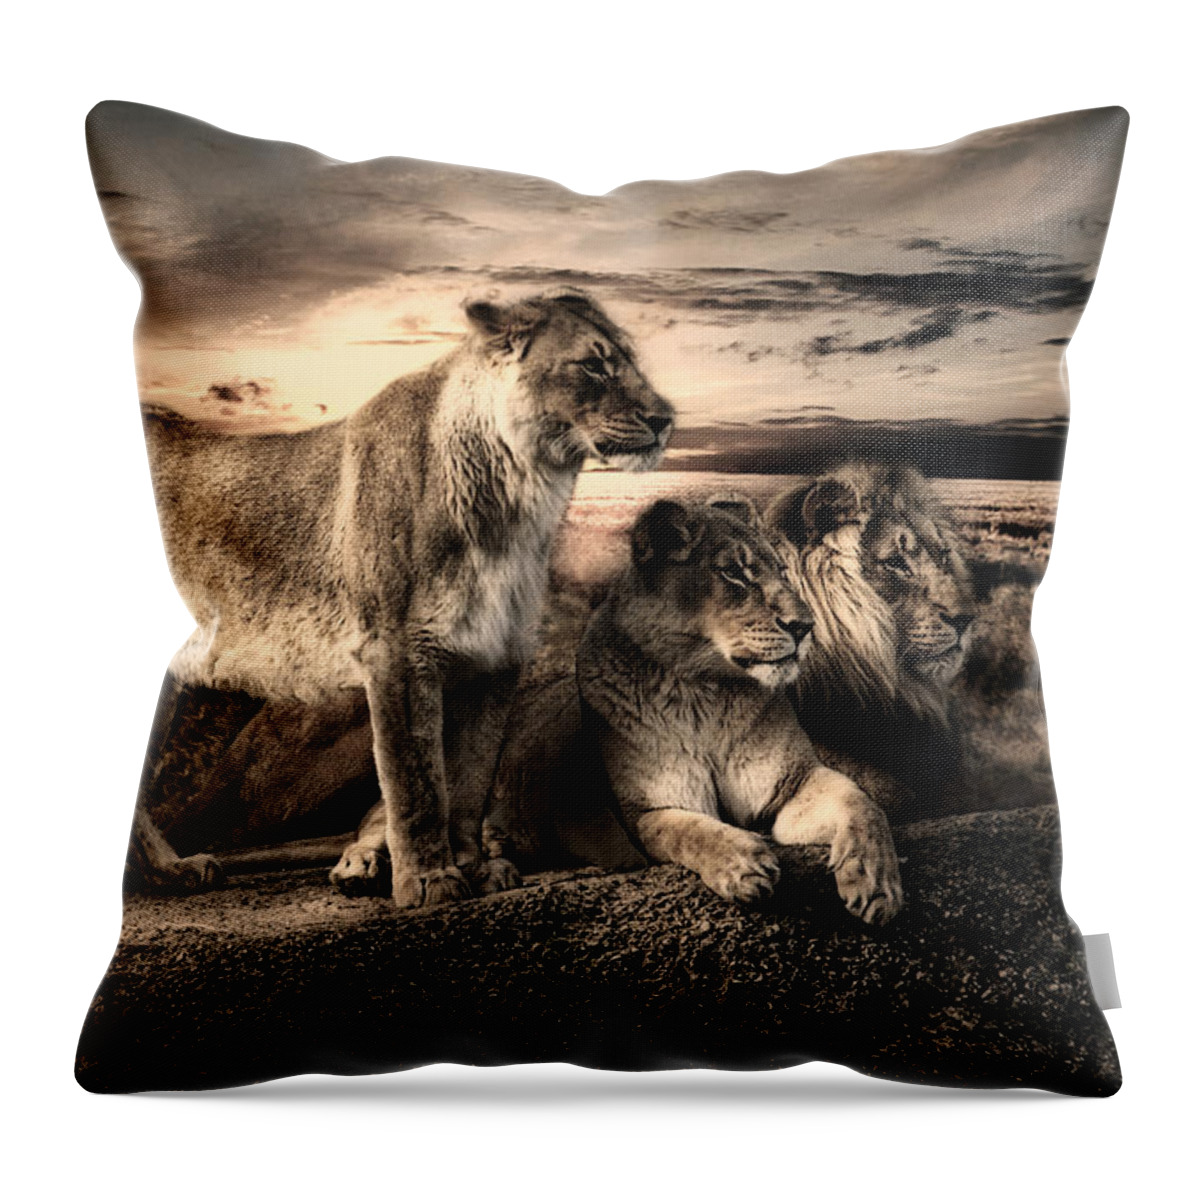 Wildlife Throw Pillow featuring the photograph Menage A Trois by Joachim G Pinkawa